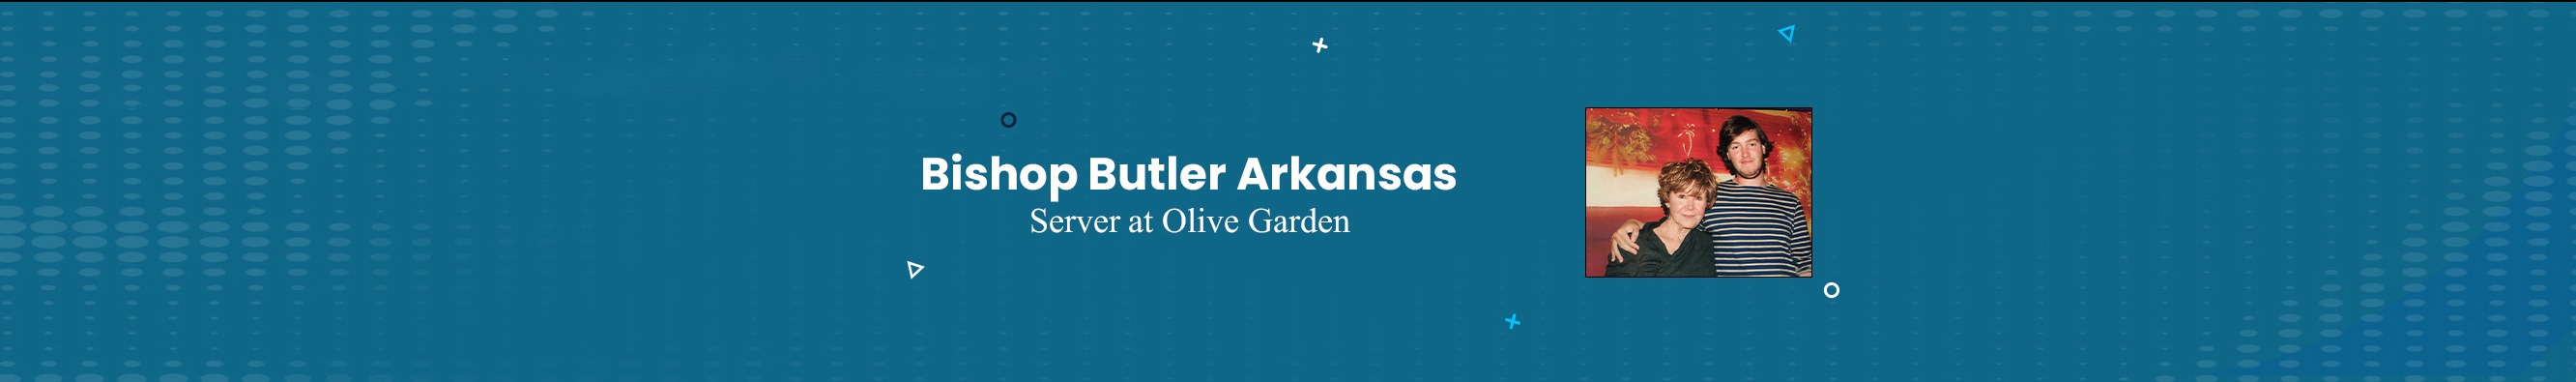 Bishop Butler Arkansas's profile banner